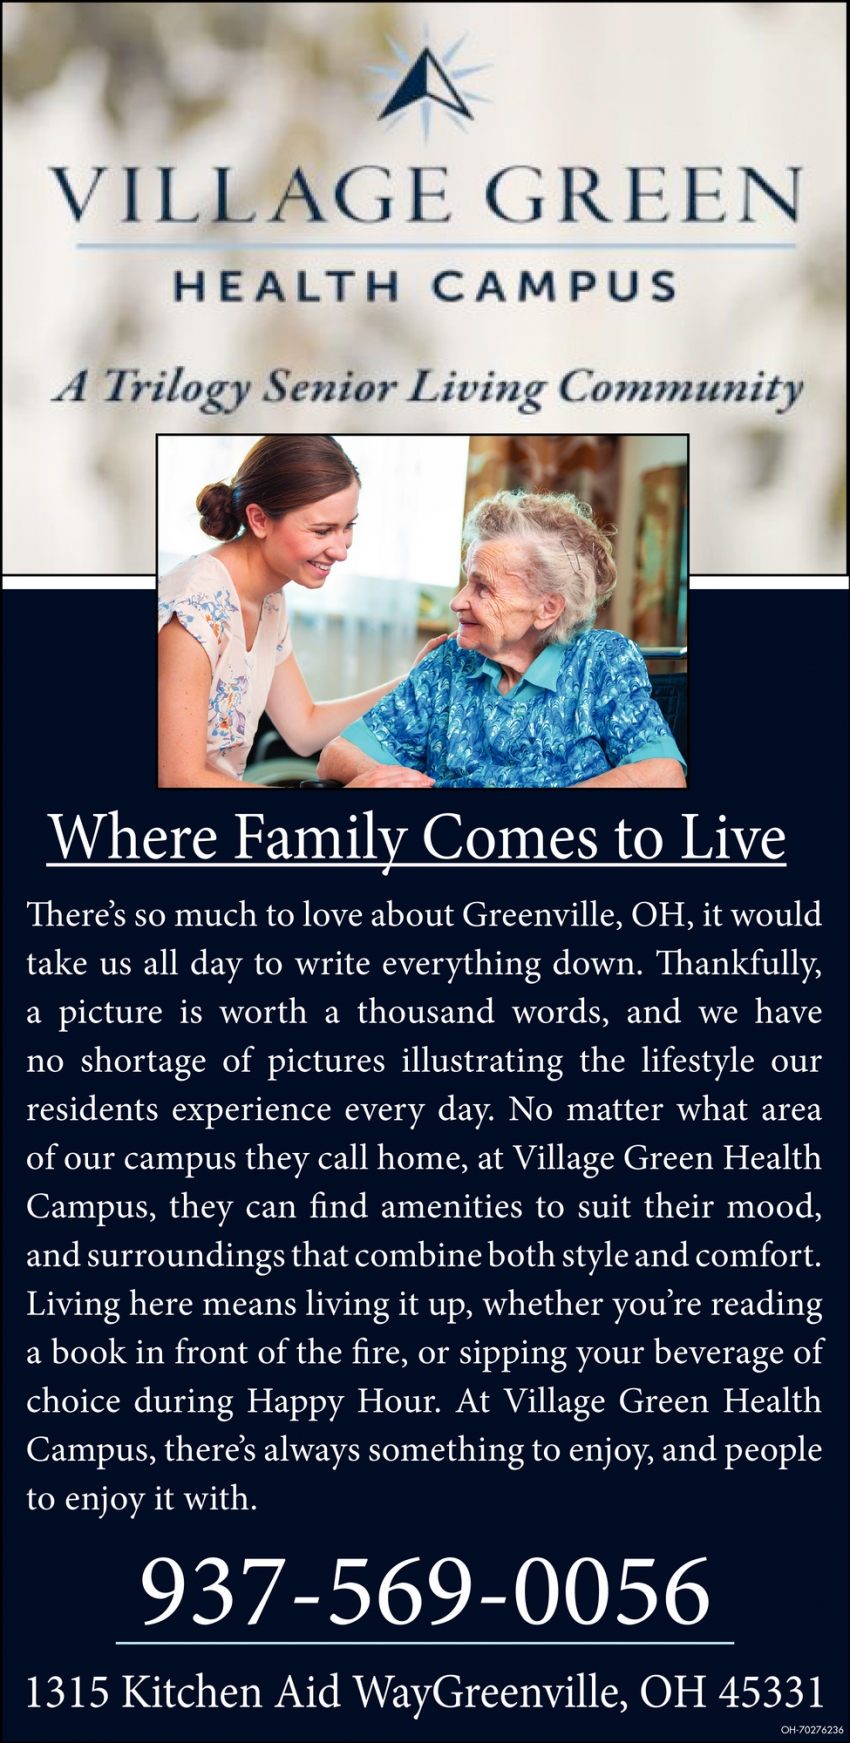 A Trilogy Senior Living Community